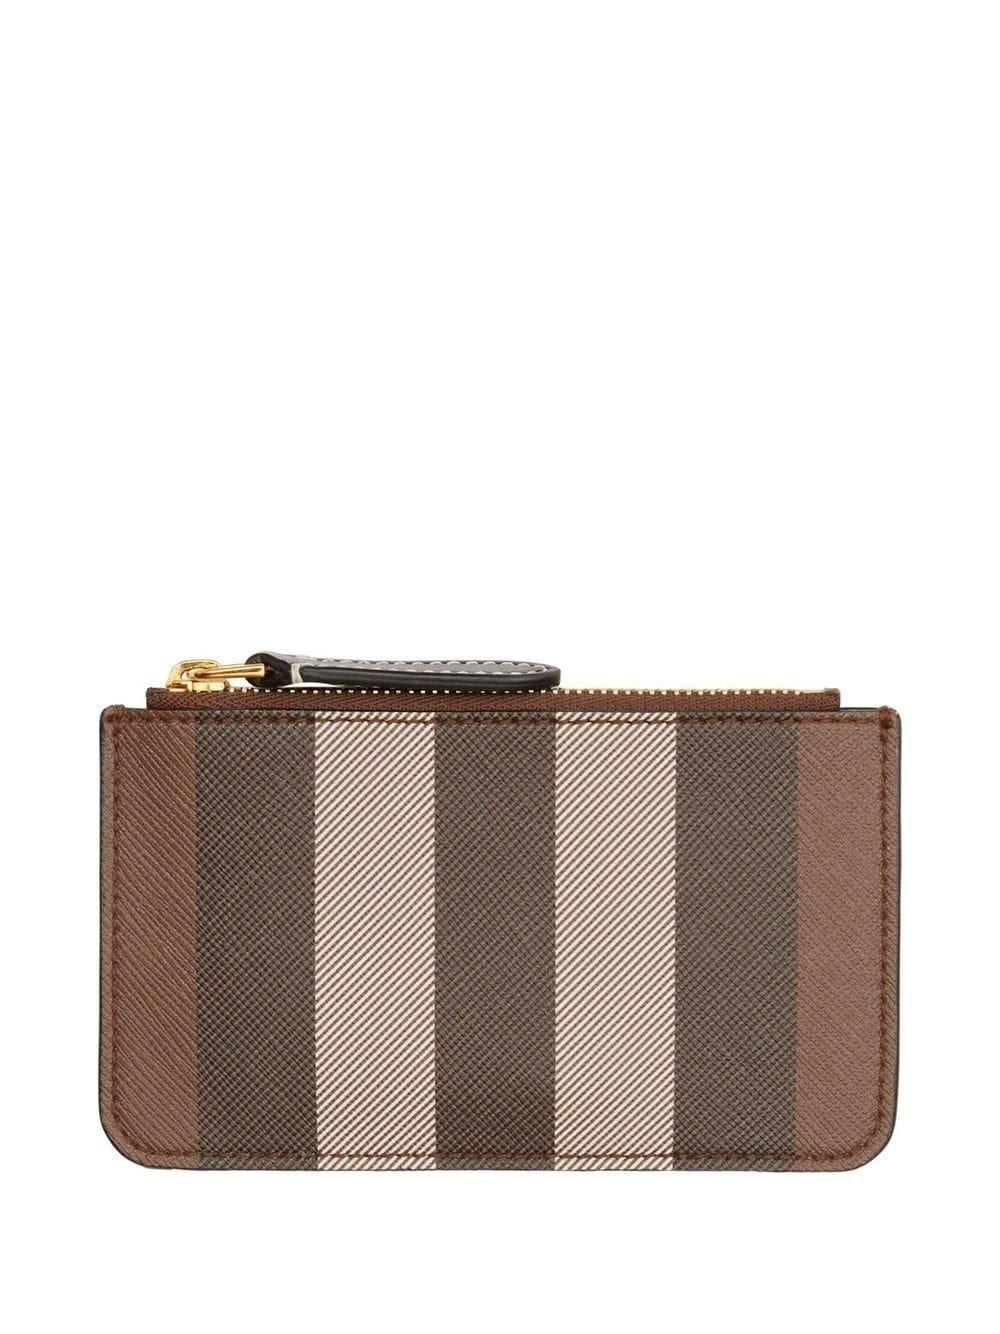 Striped Zipped Wallet